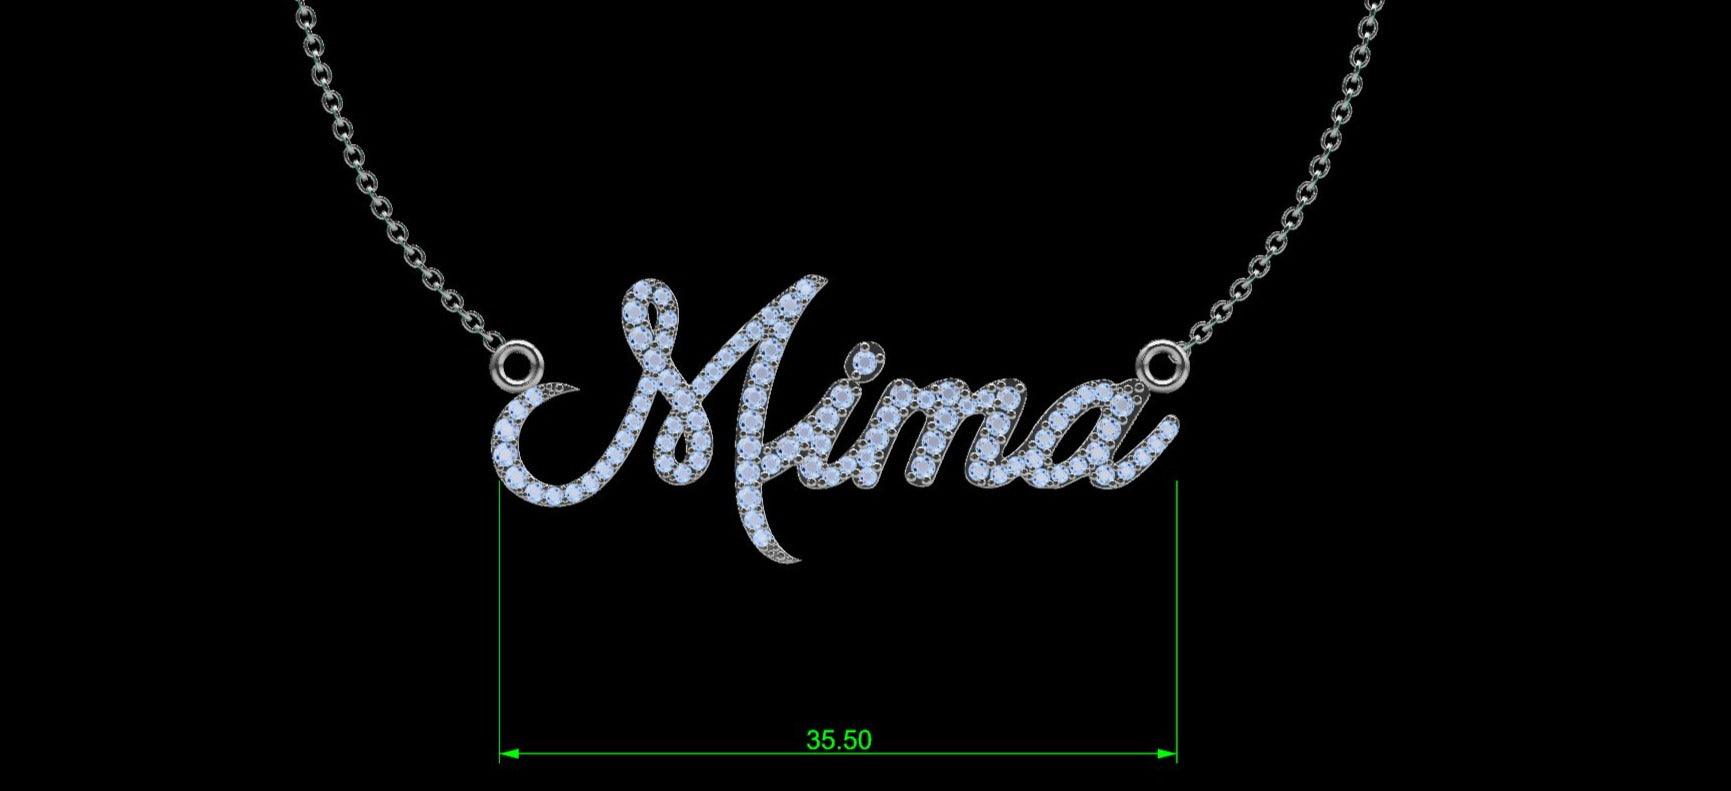 Personalised Diamond Name Necklace - Thenetjeweler